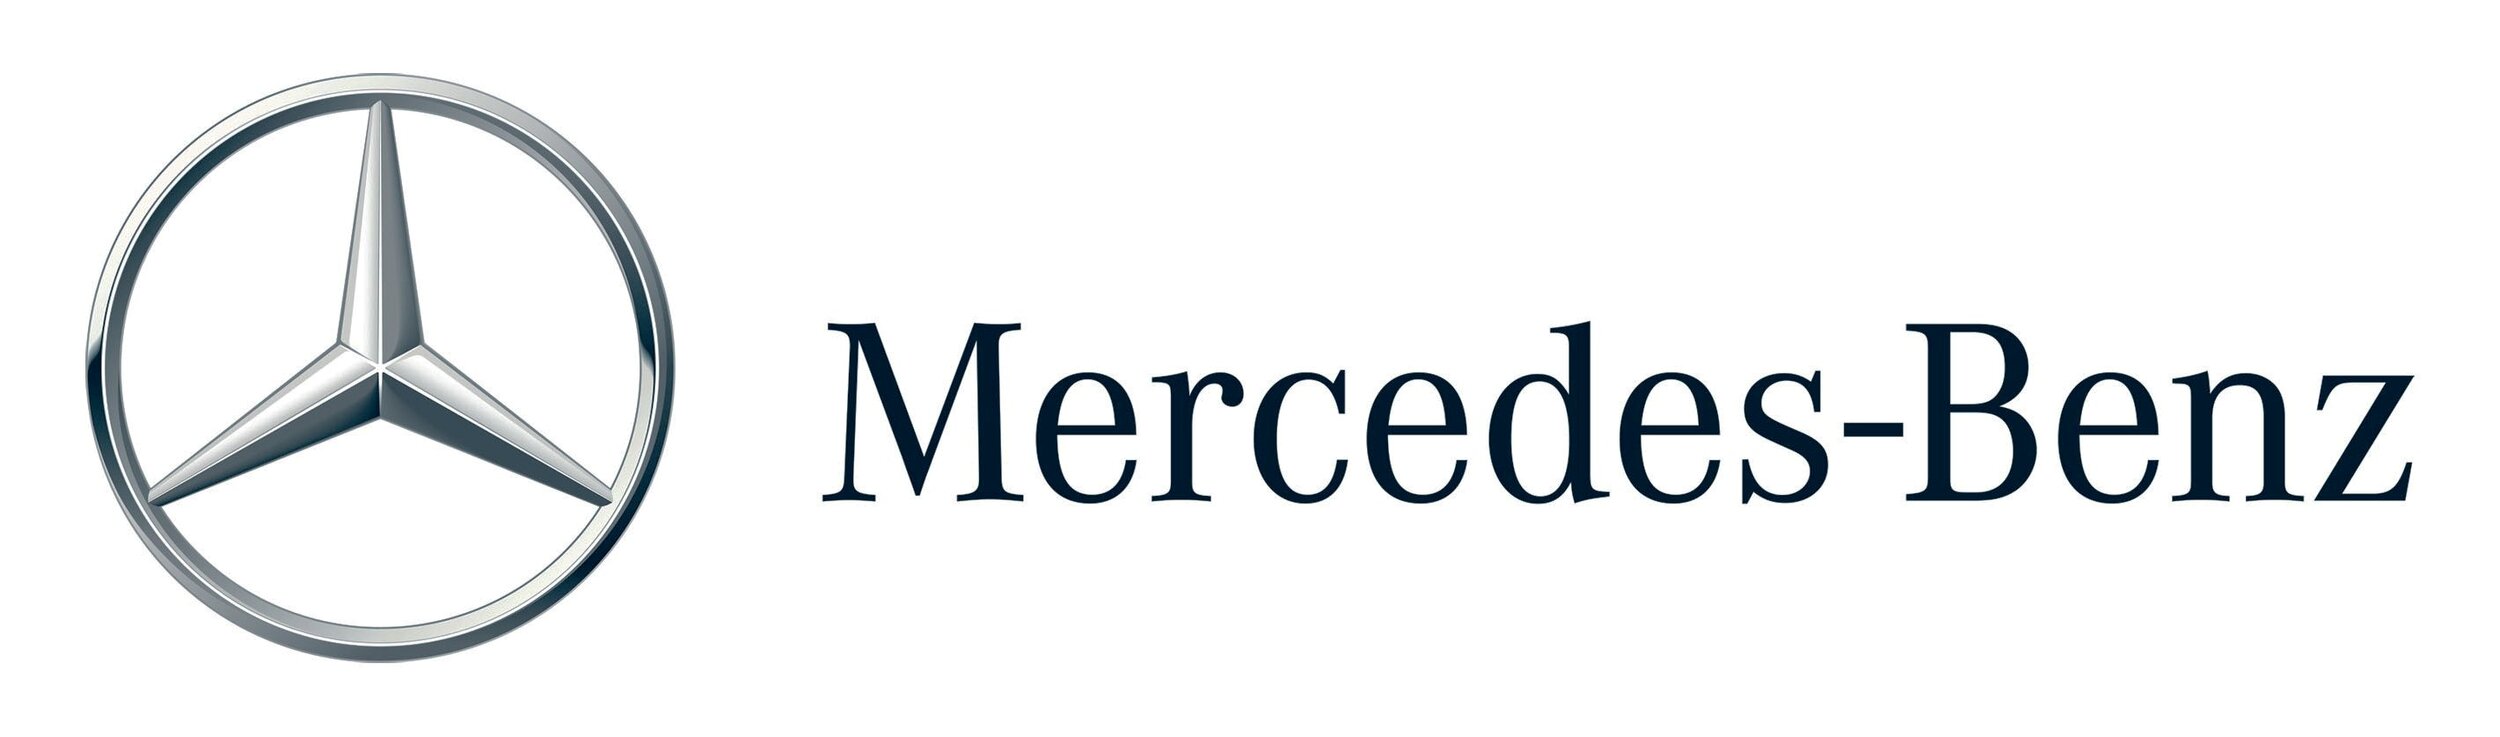 Mercedes Benz Logo.jpg